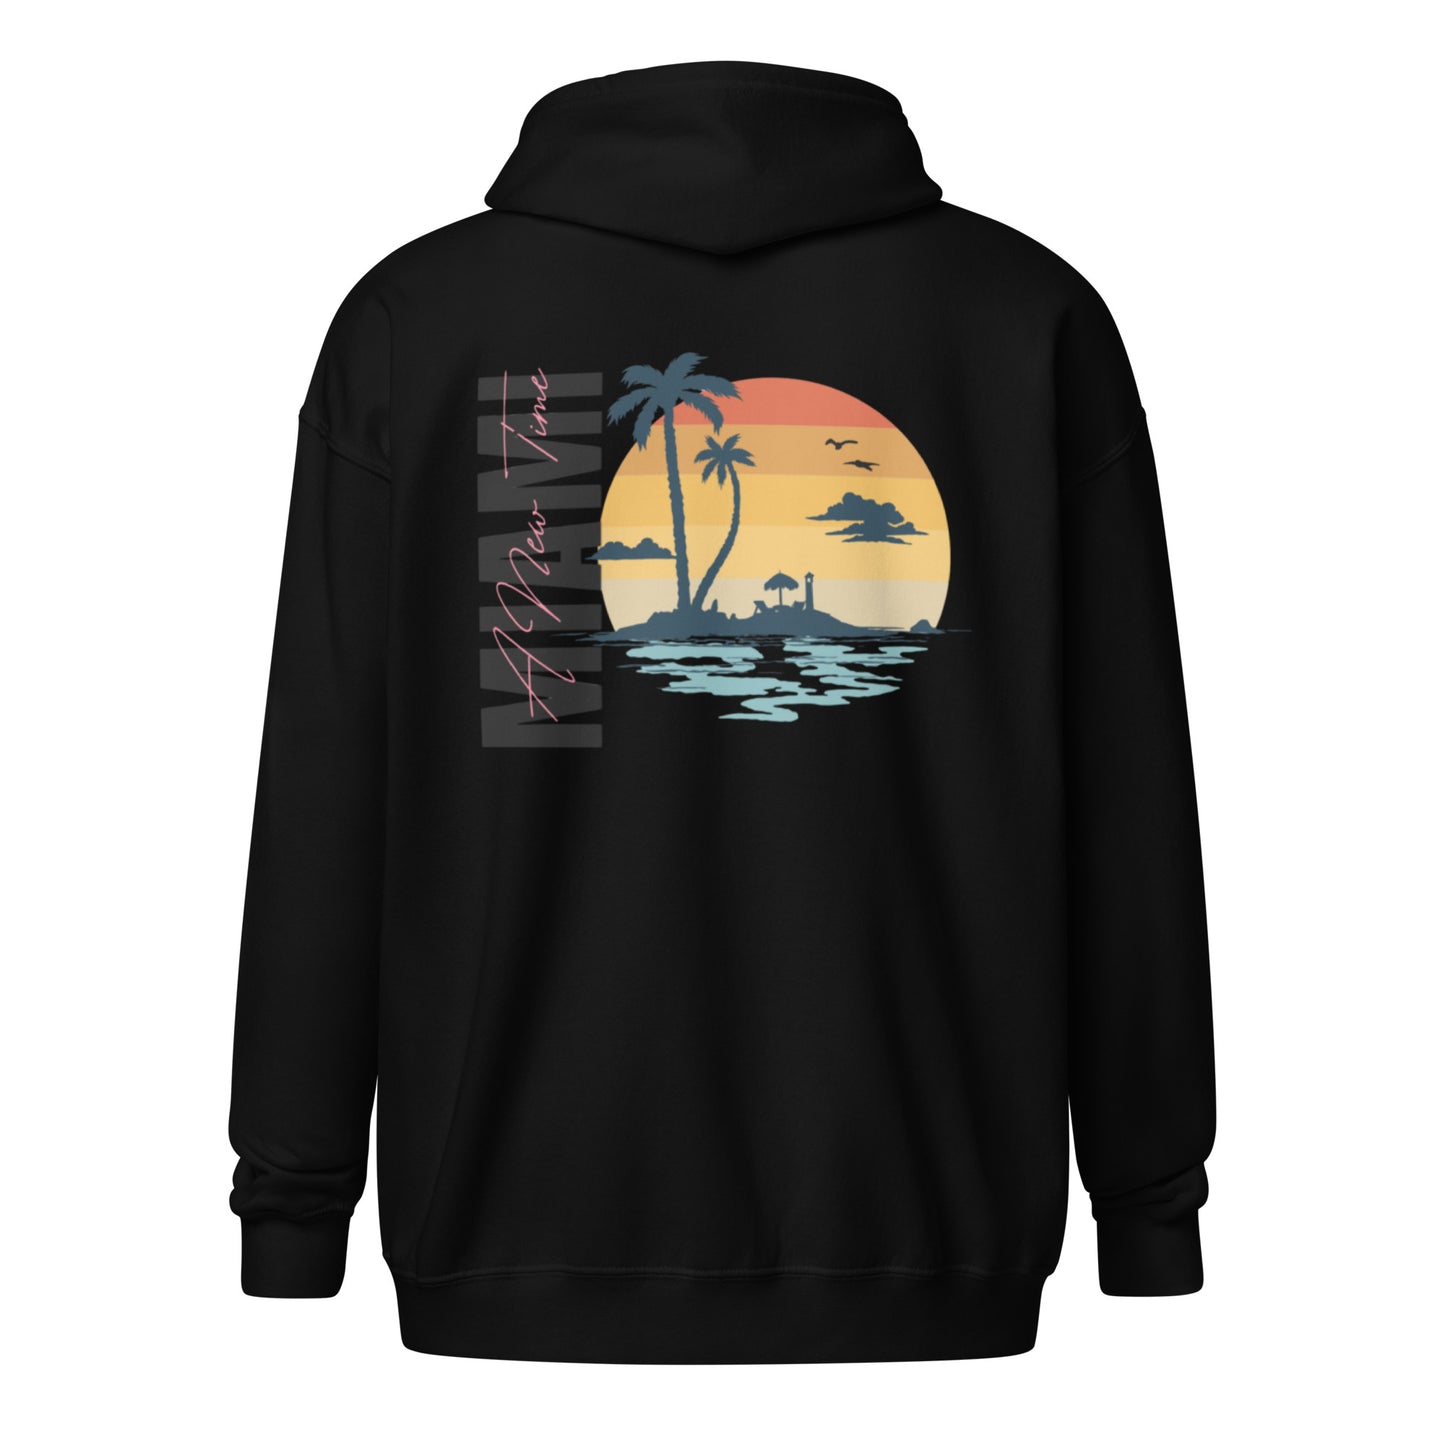 Miami Beach zip hoodie